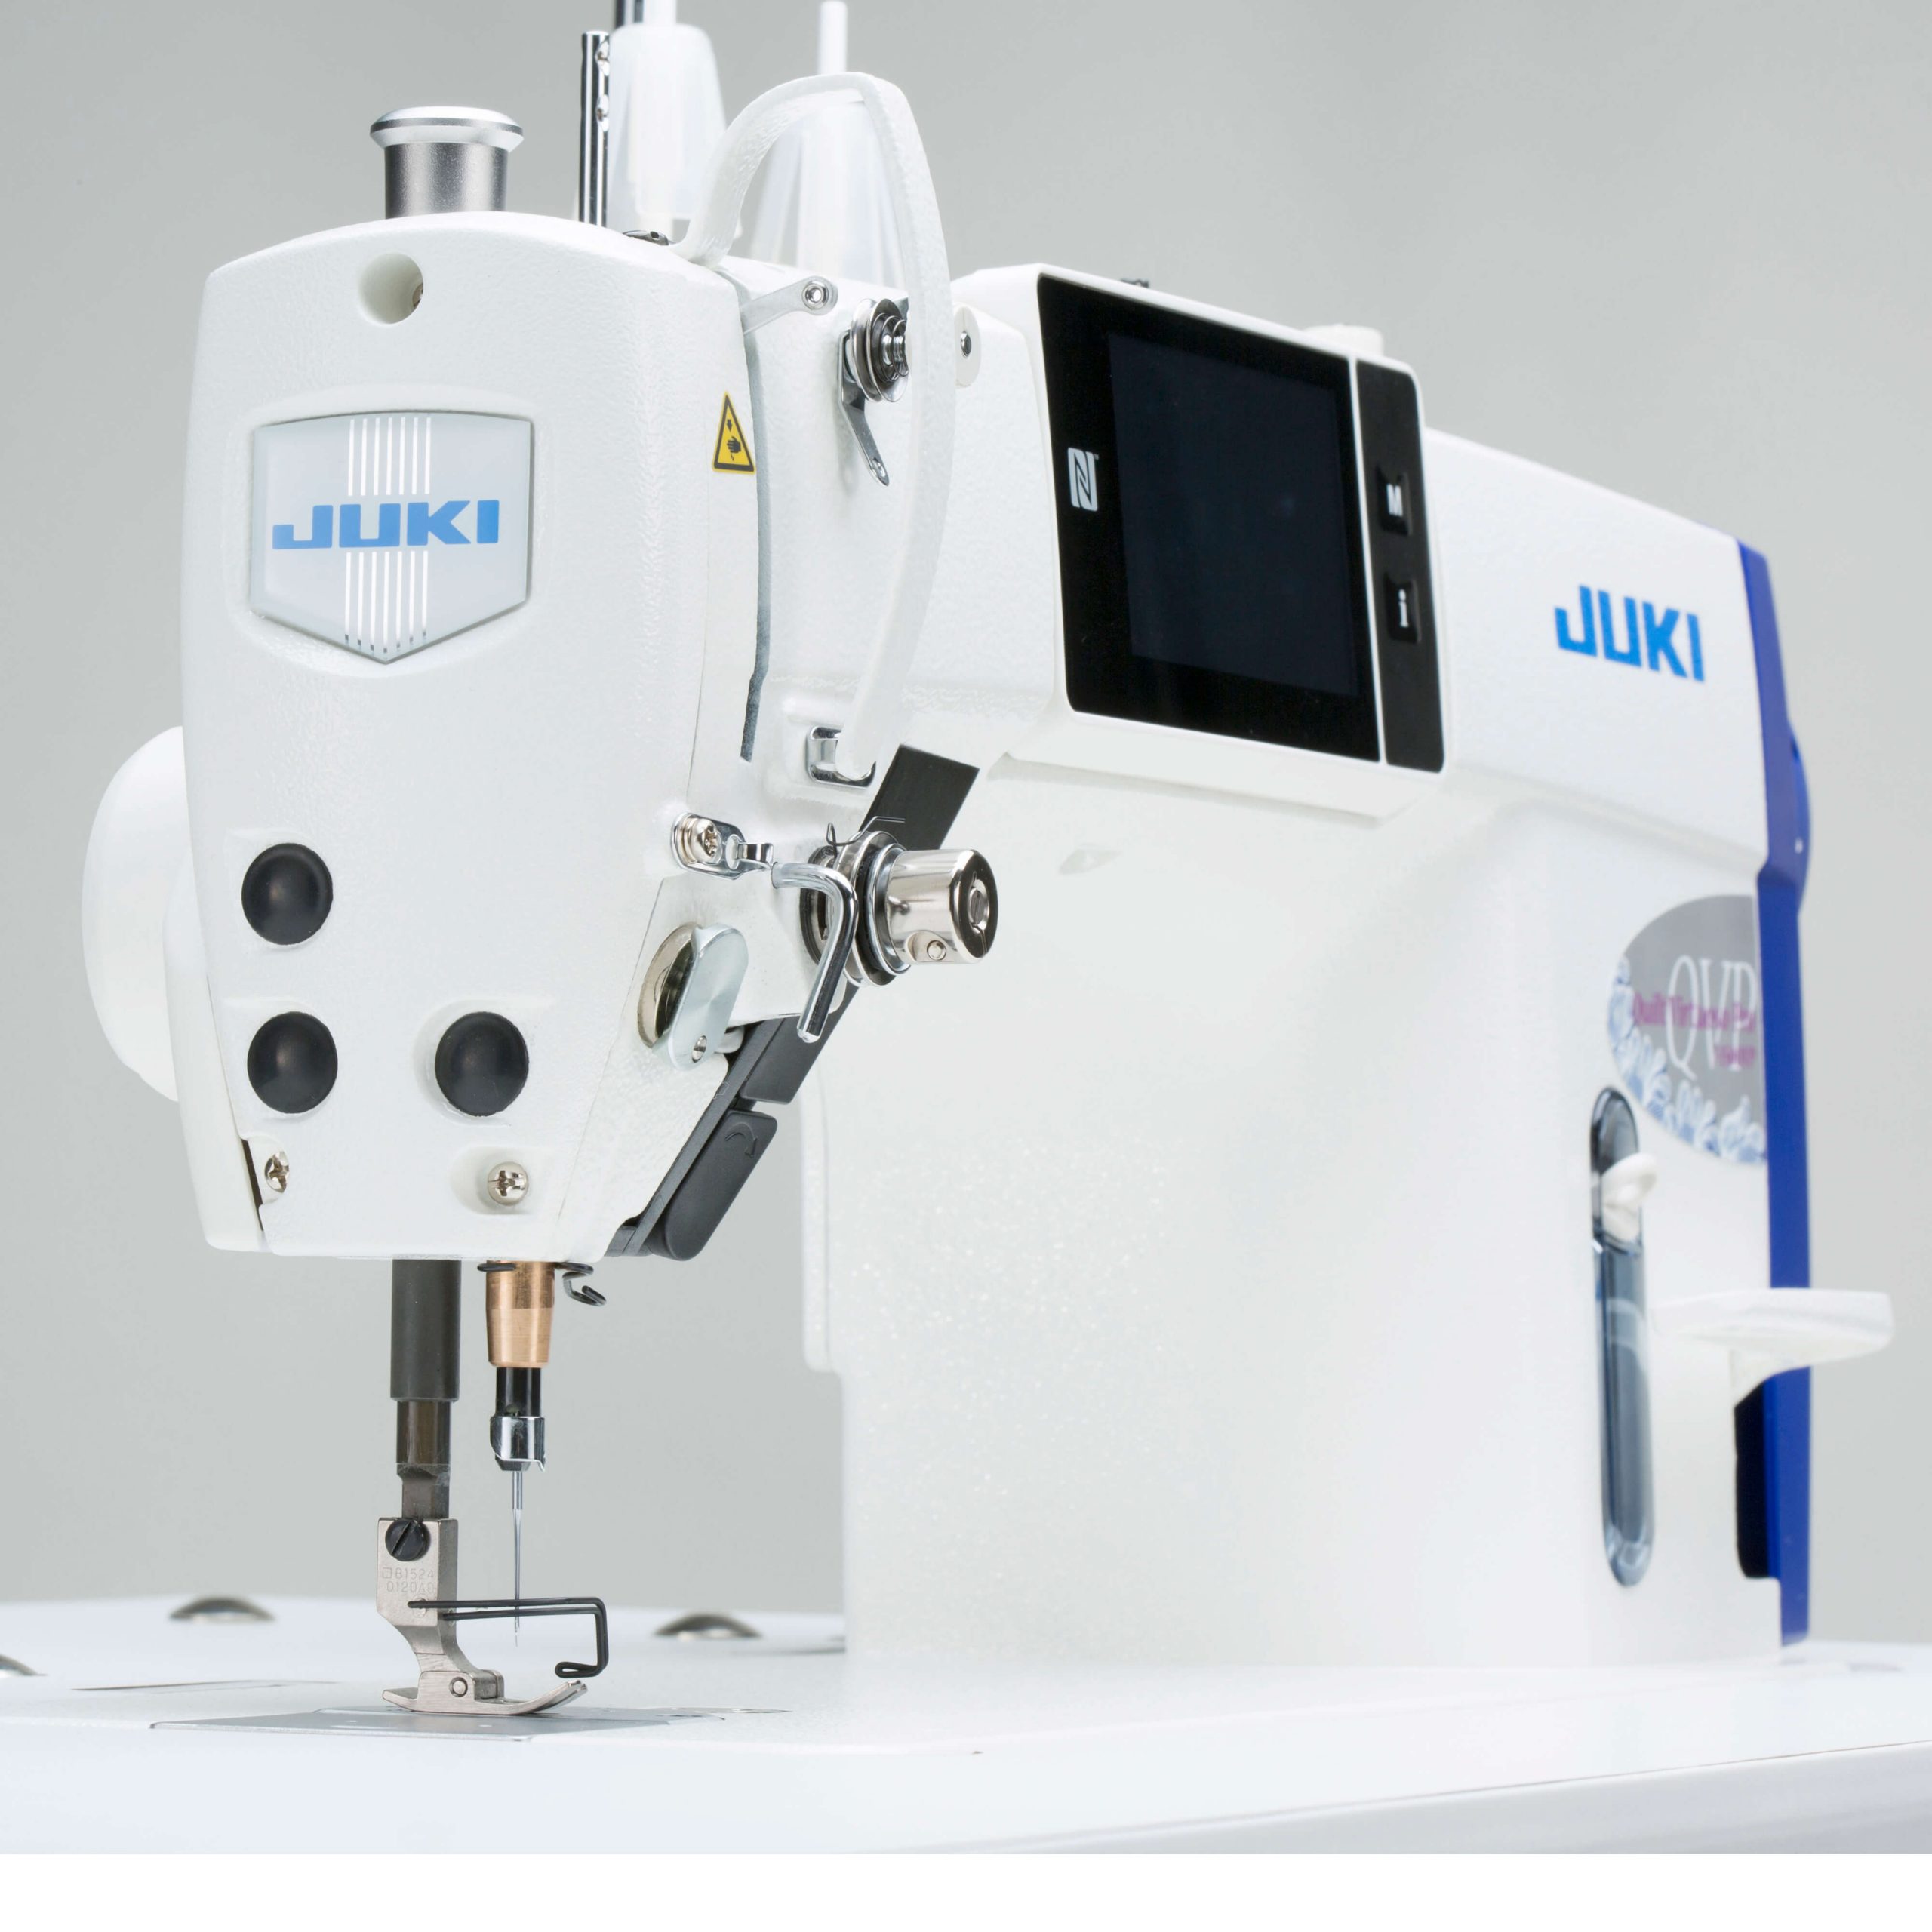 Juki J-150QVP High Speed Free Motion Quilting and Sewing Machine